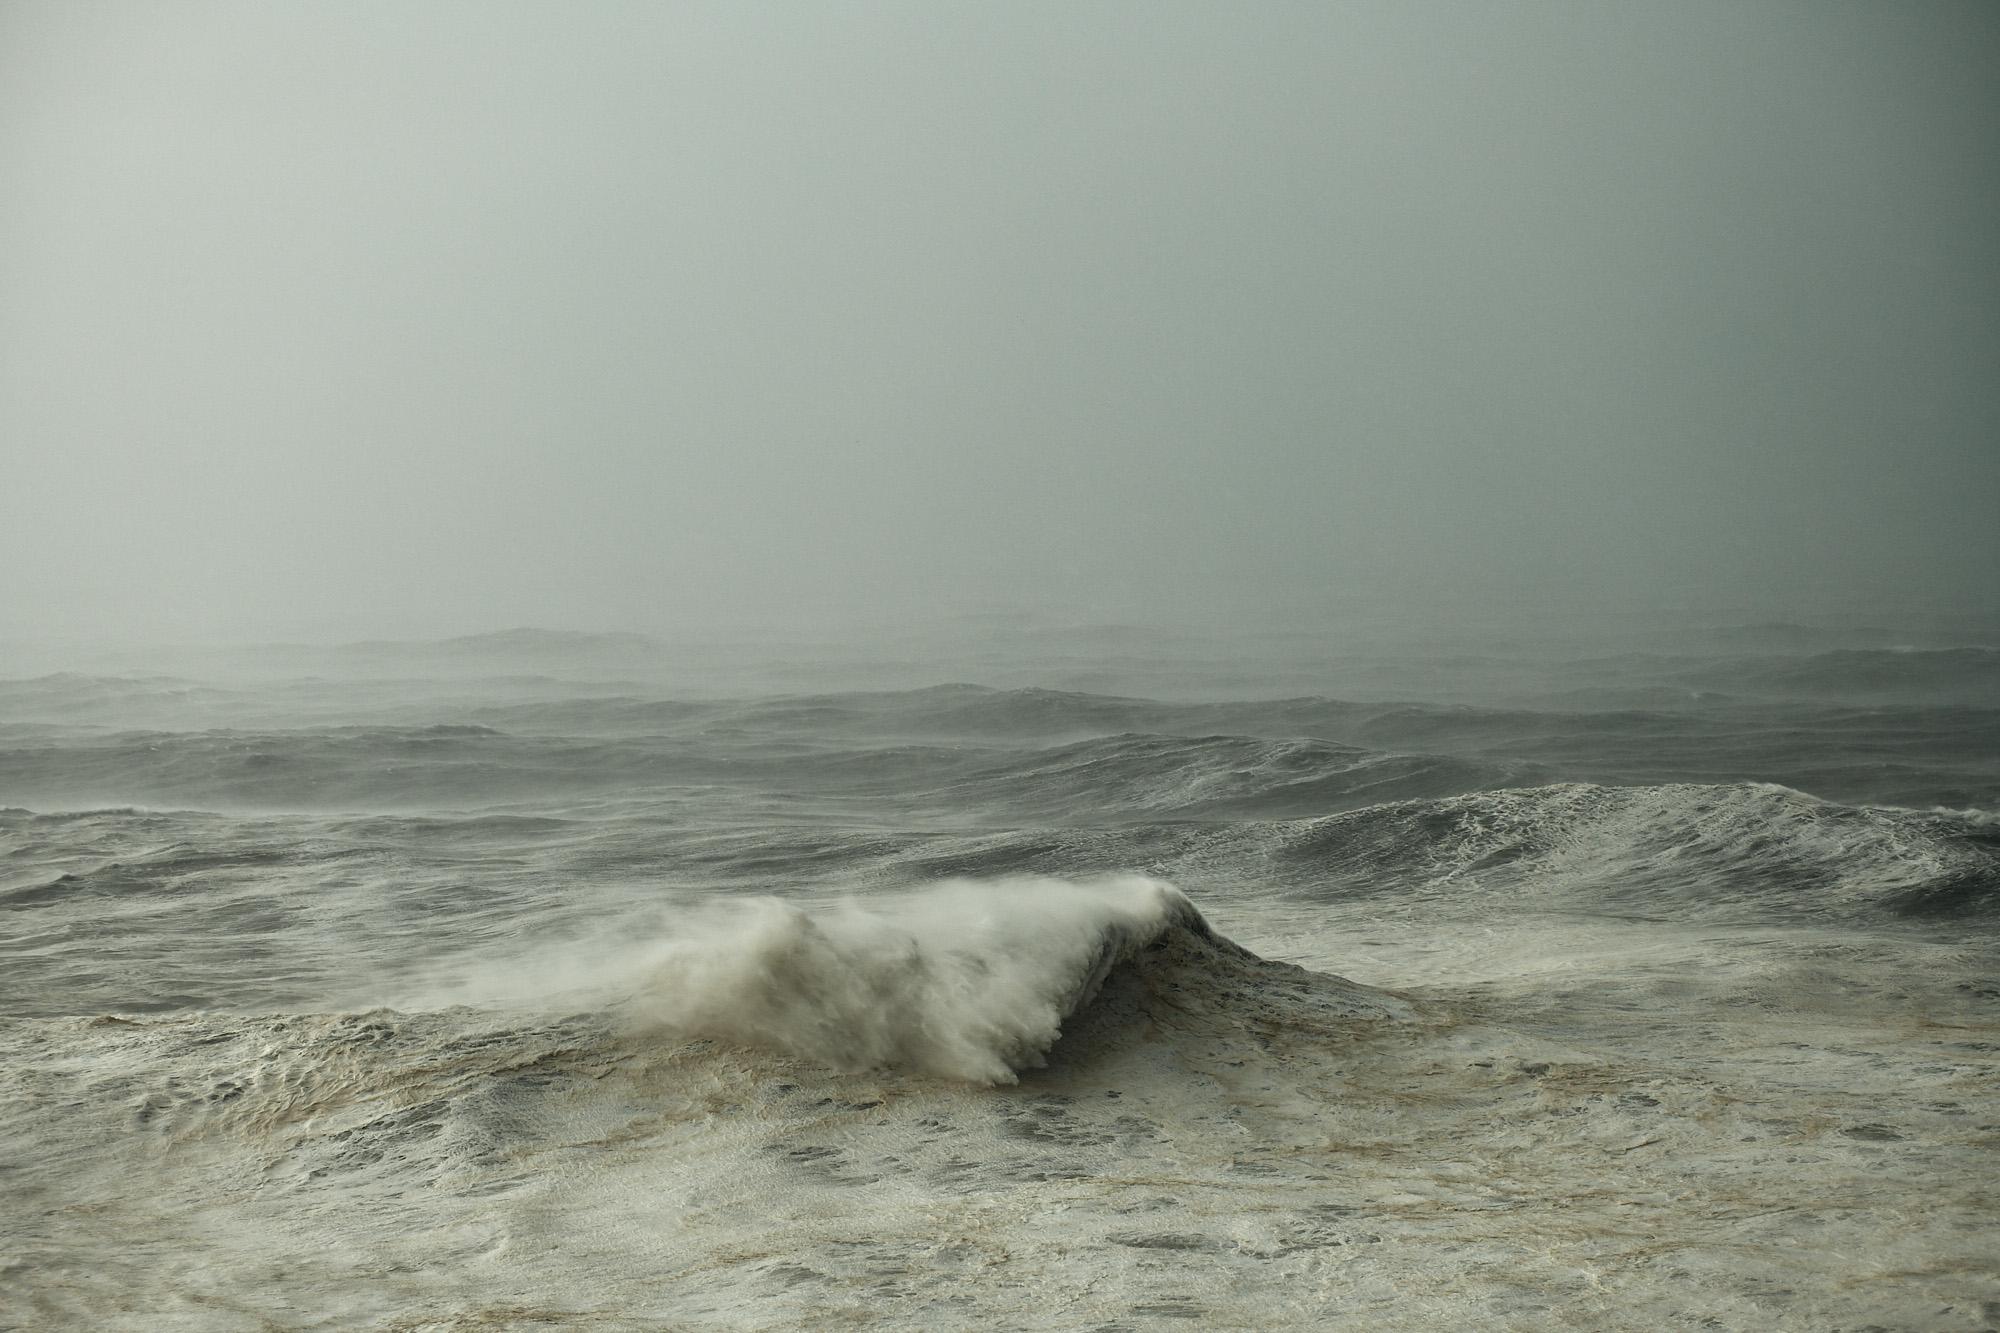 Alessandro Puccinelli Landscape Photograph - Mare 399 - Seascape photograph